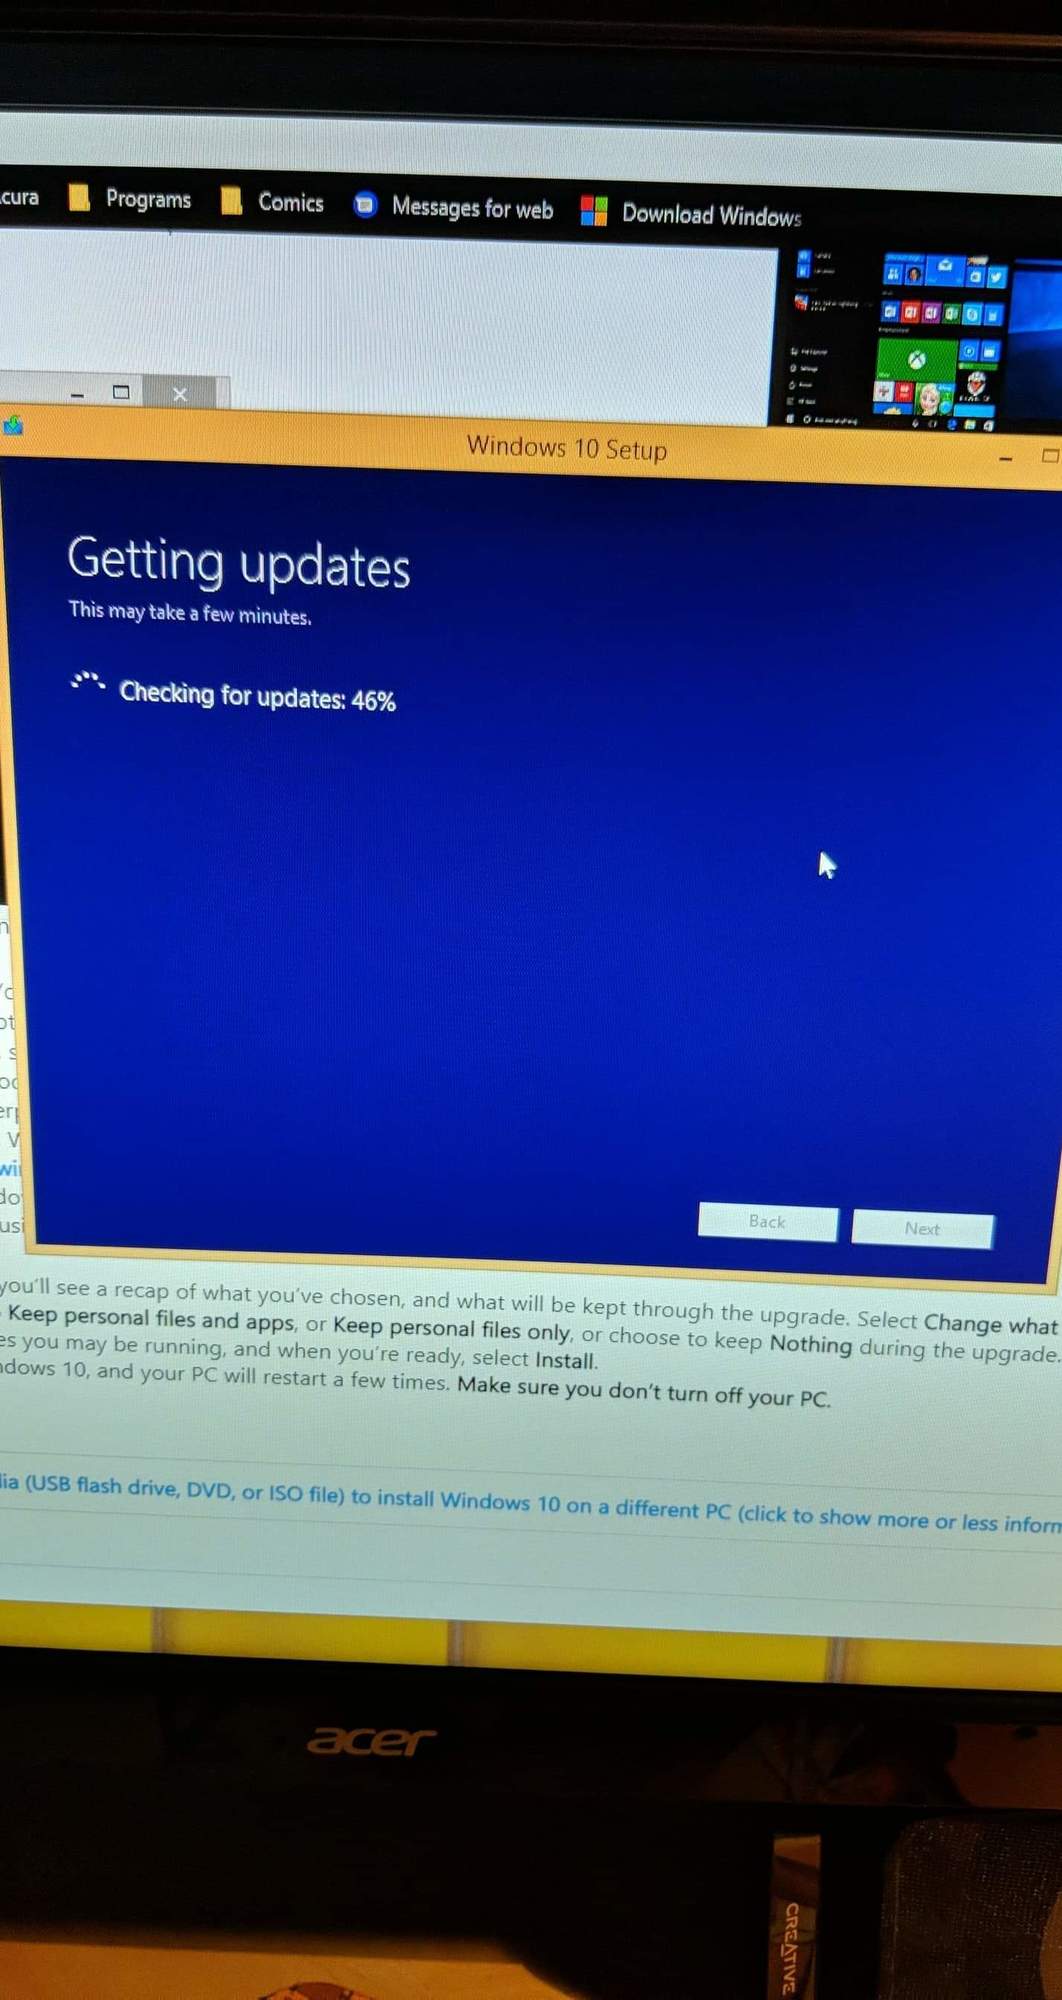 Upgrading to Windows 10 issued 2c44a237-7924-4a54-b14b-c85622132374?upload=true.jpg